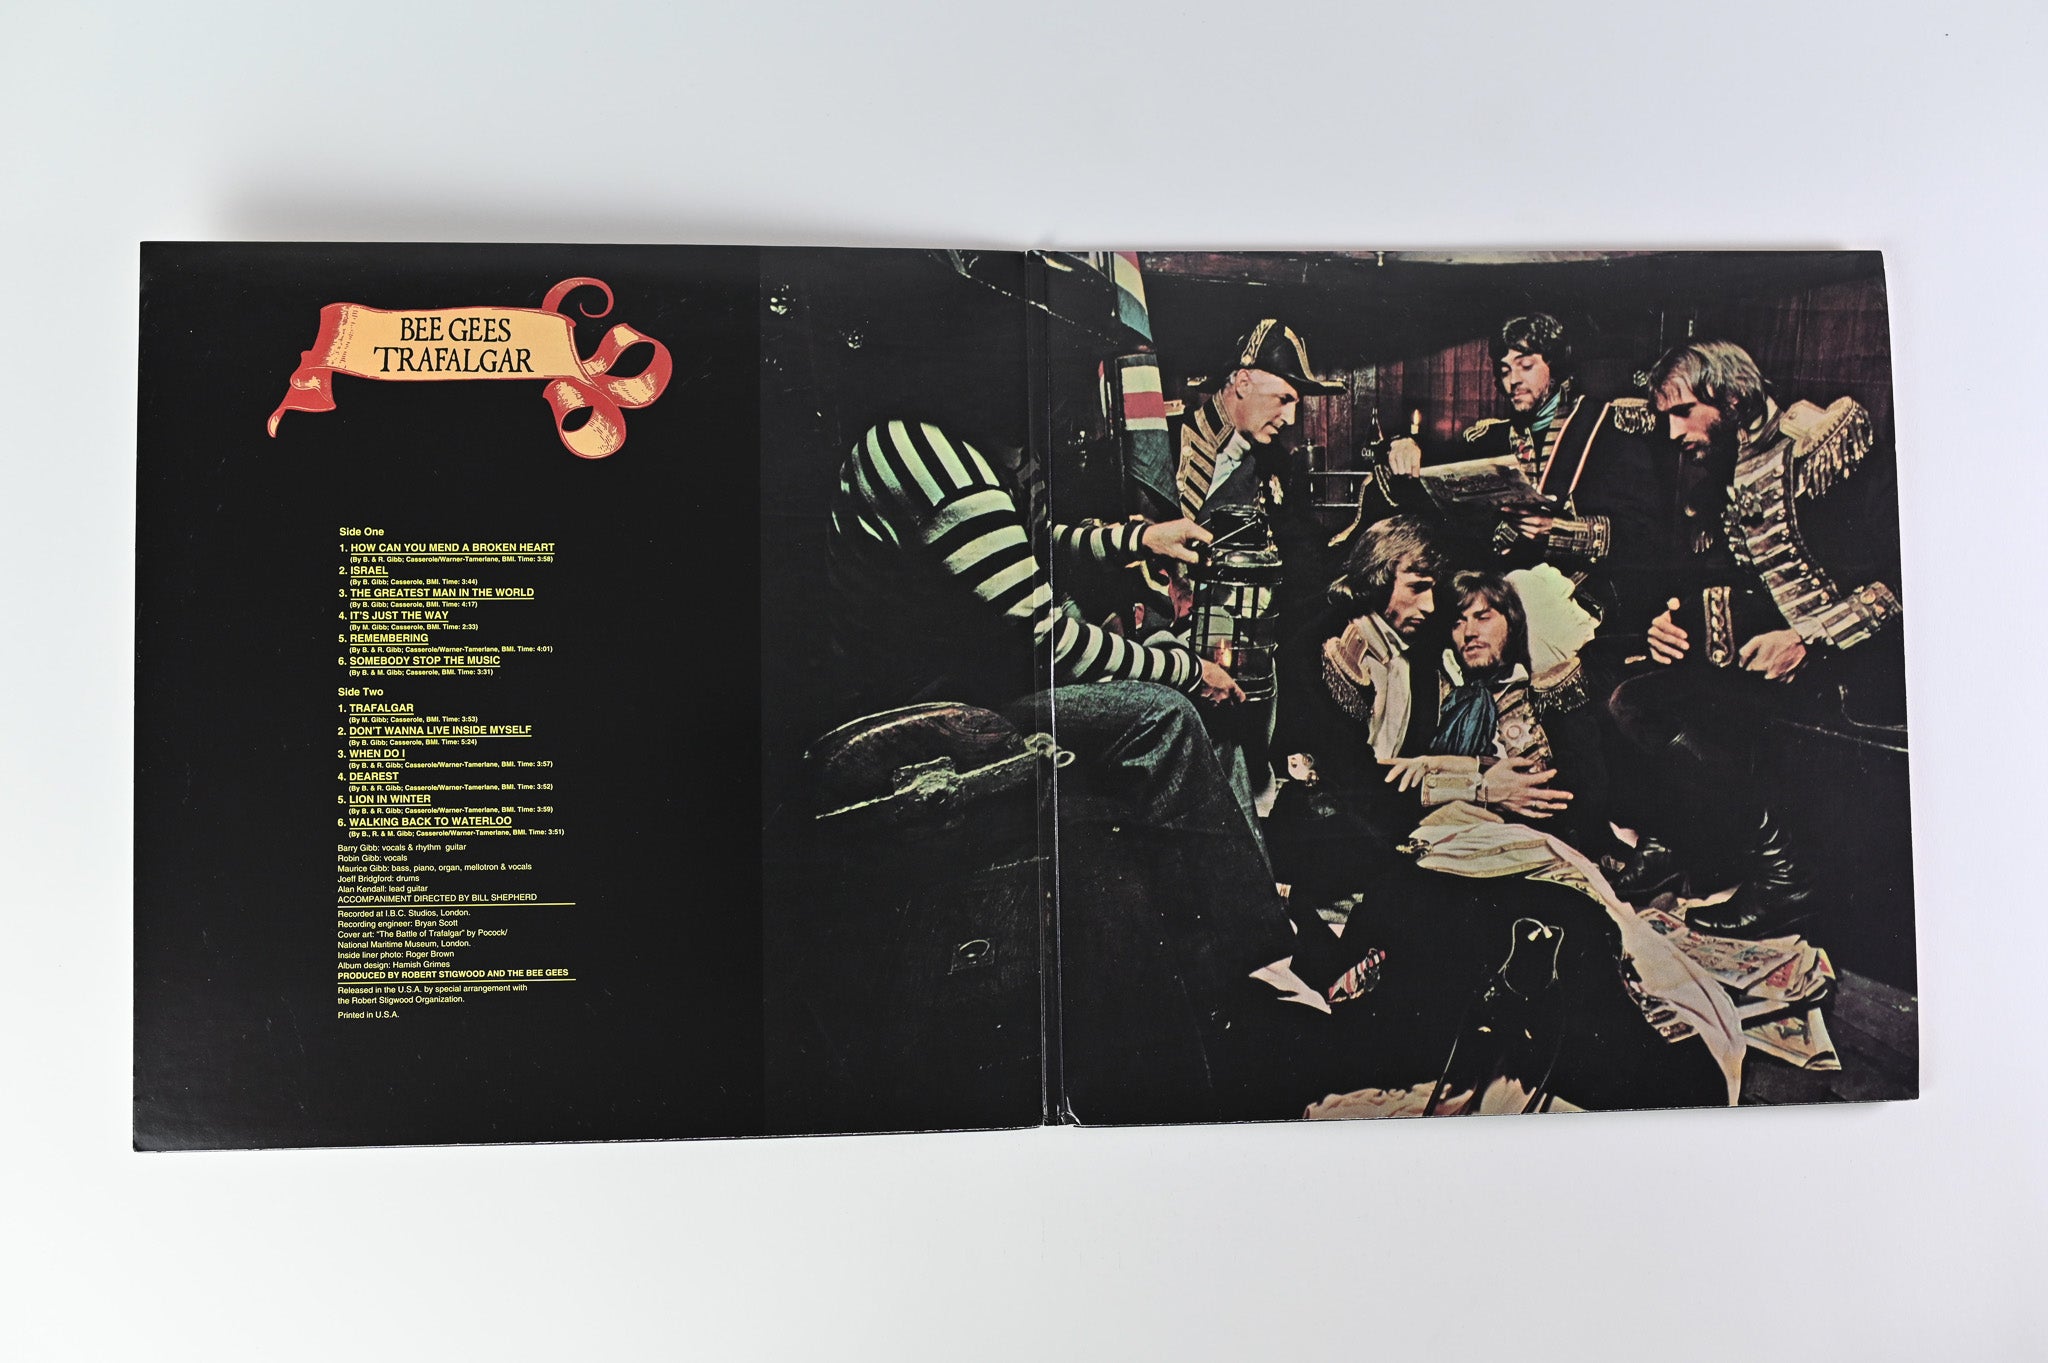 Bee Gees - Trafalgar on Mobile Fidelity Original Master Recording Ltd Numbered Remastered